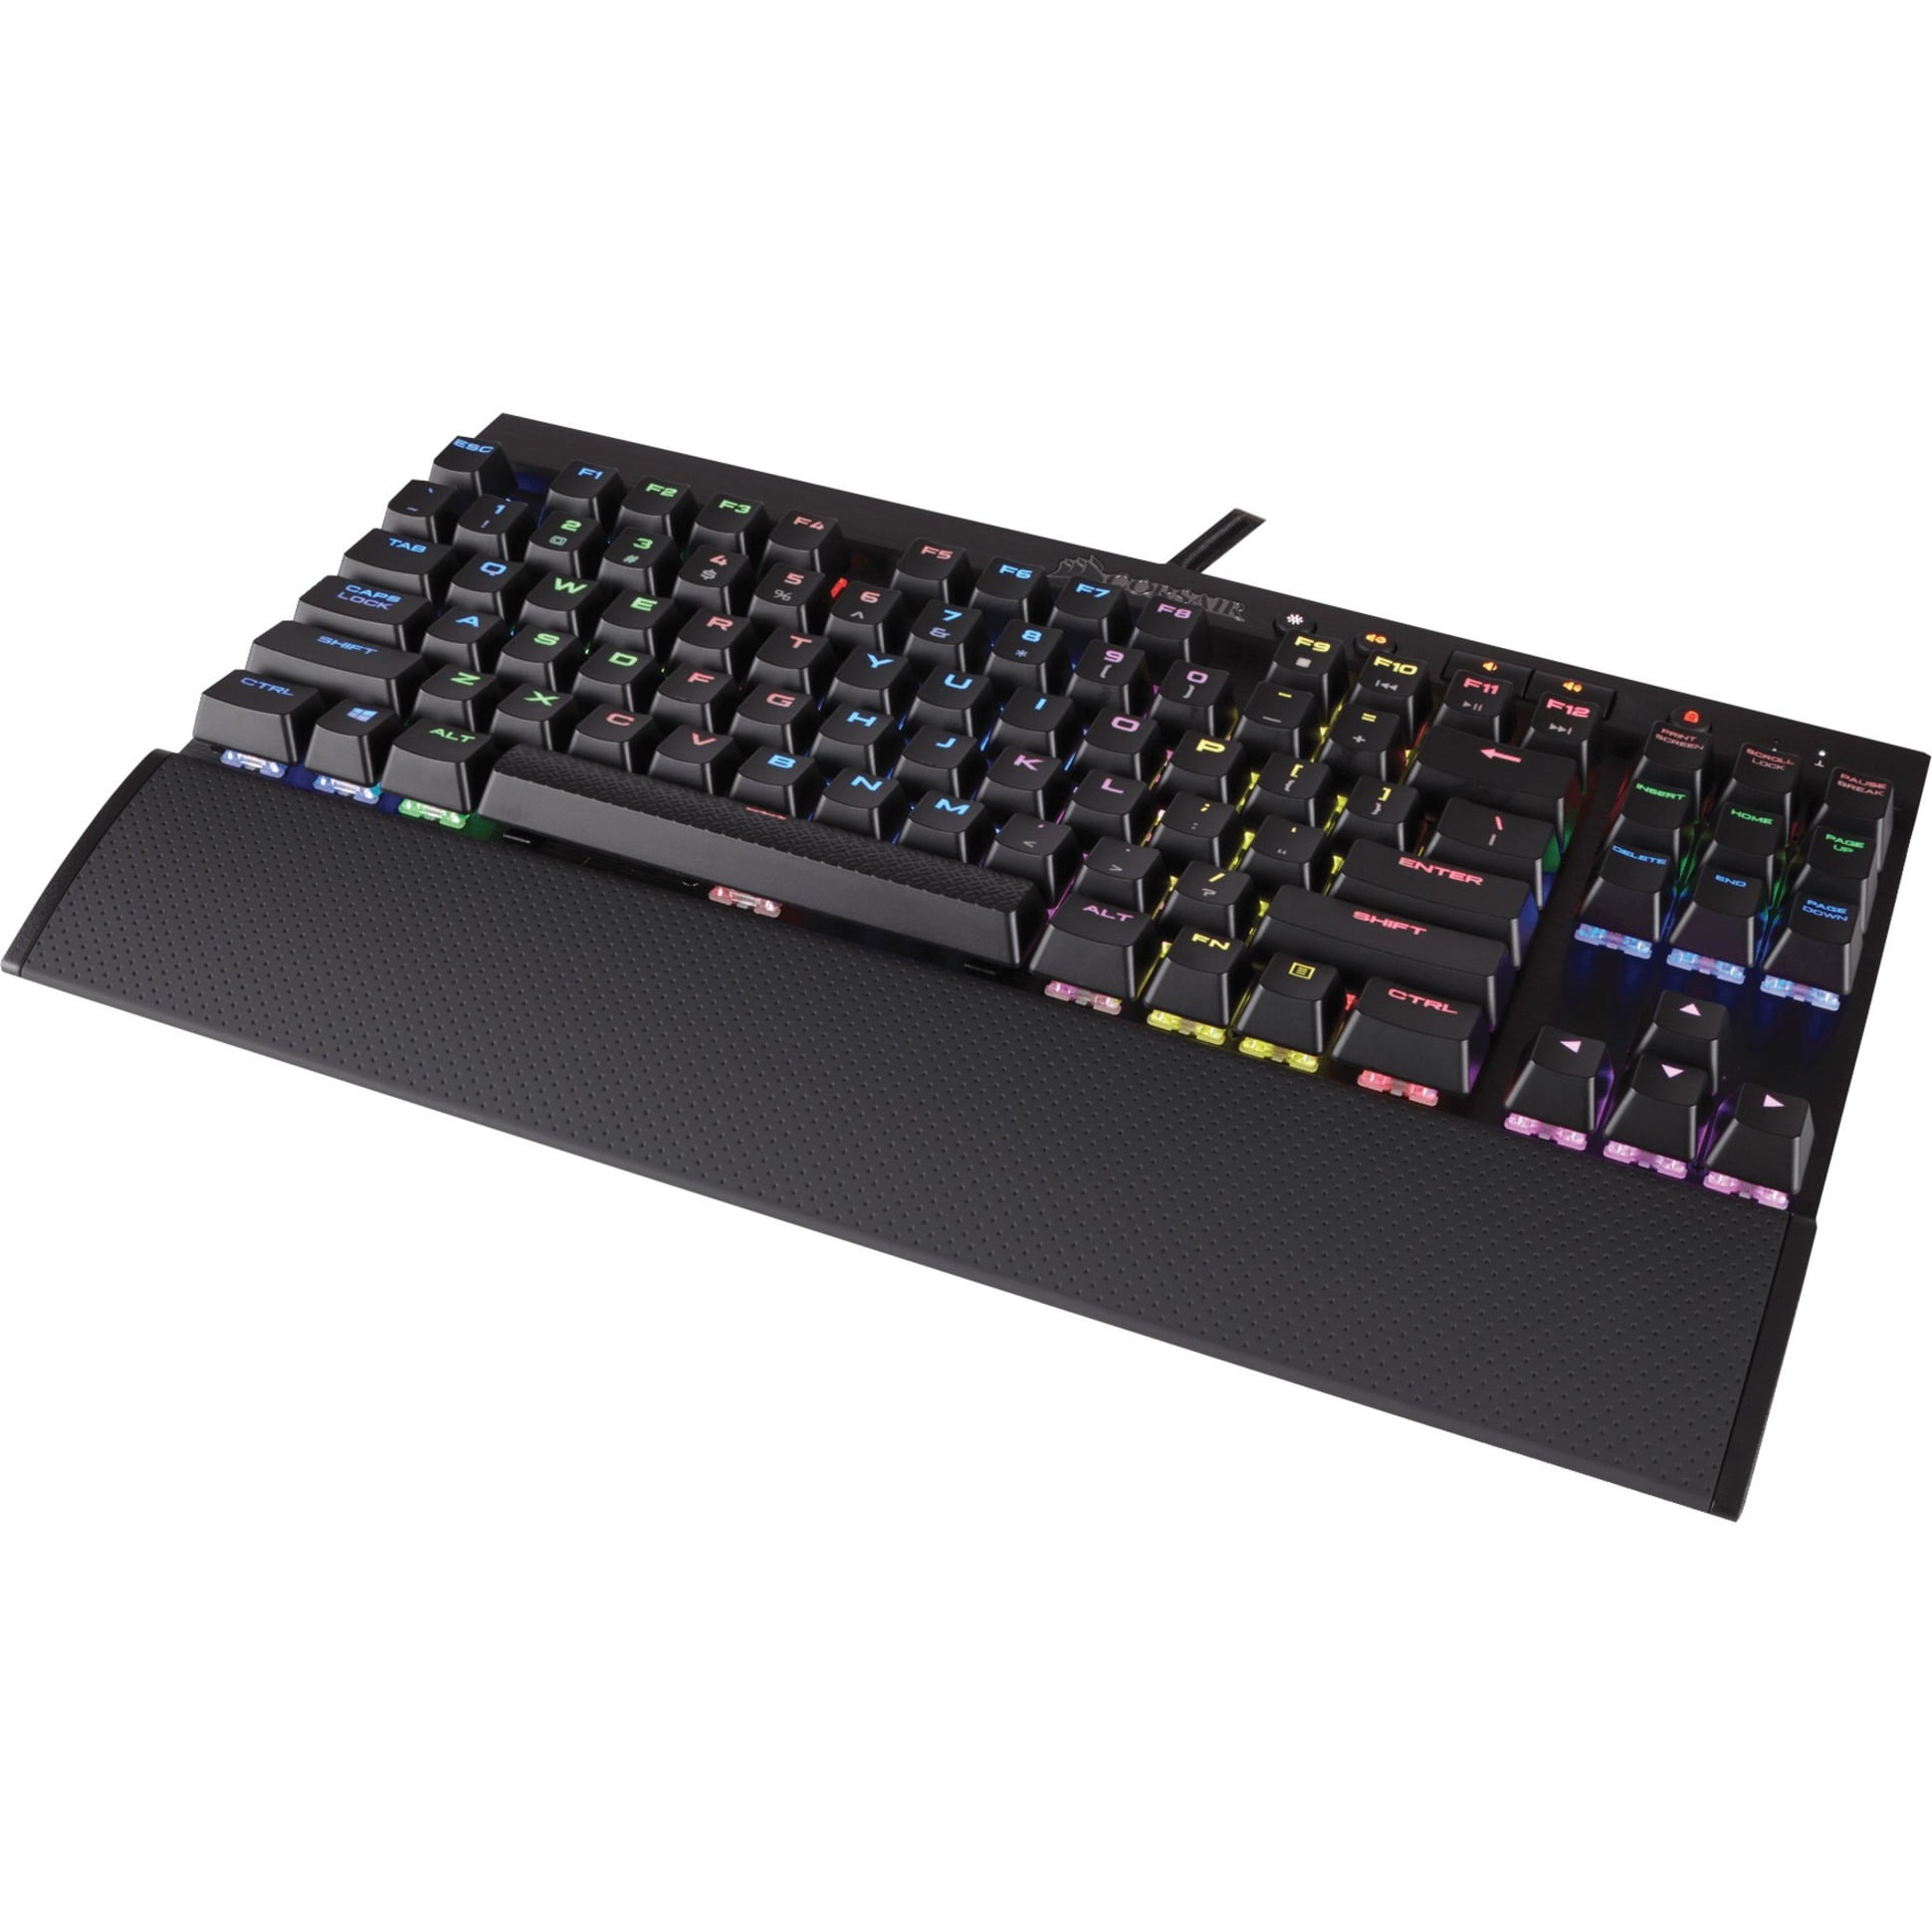 Corsair K65 RGB RAPIDFIRE Compact Mechanical Gaming Keyboard